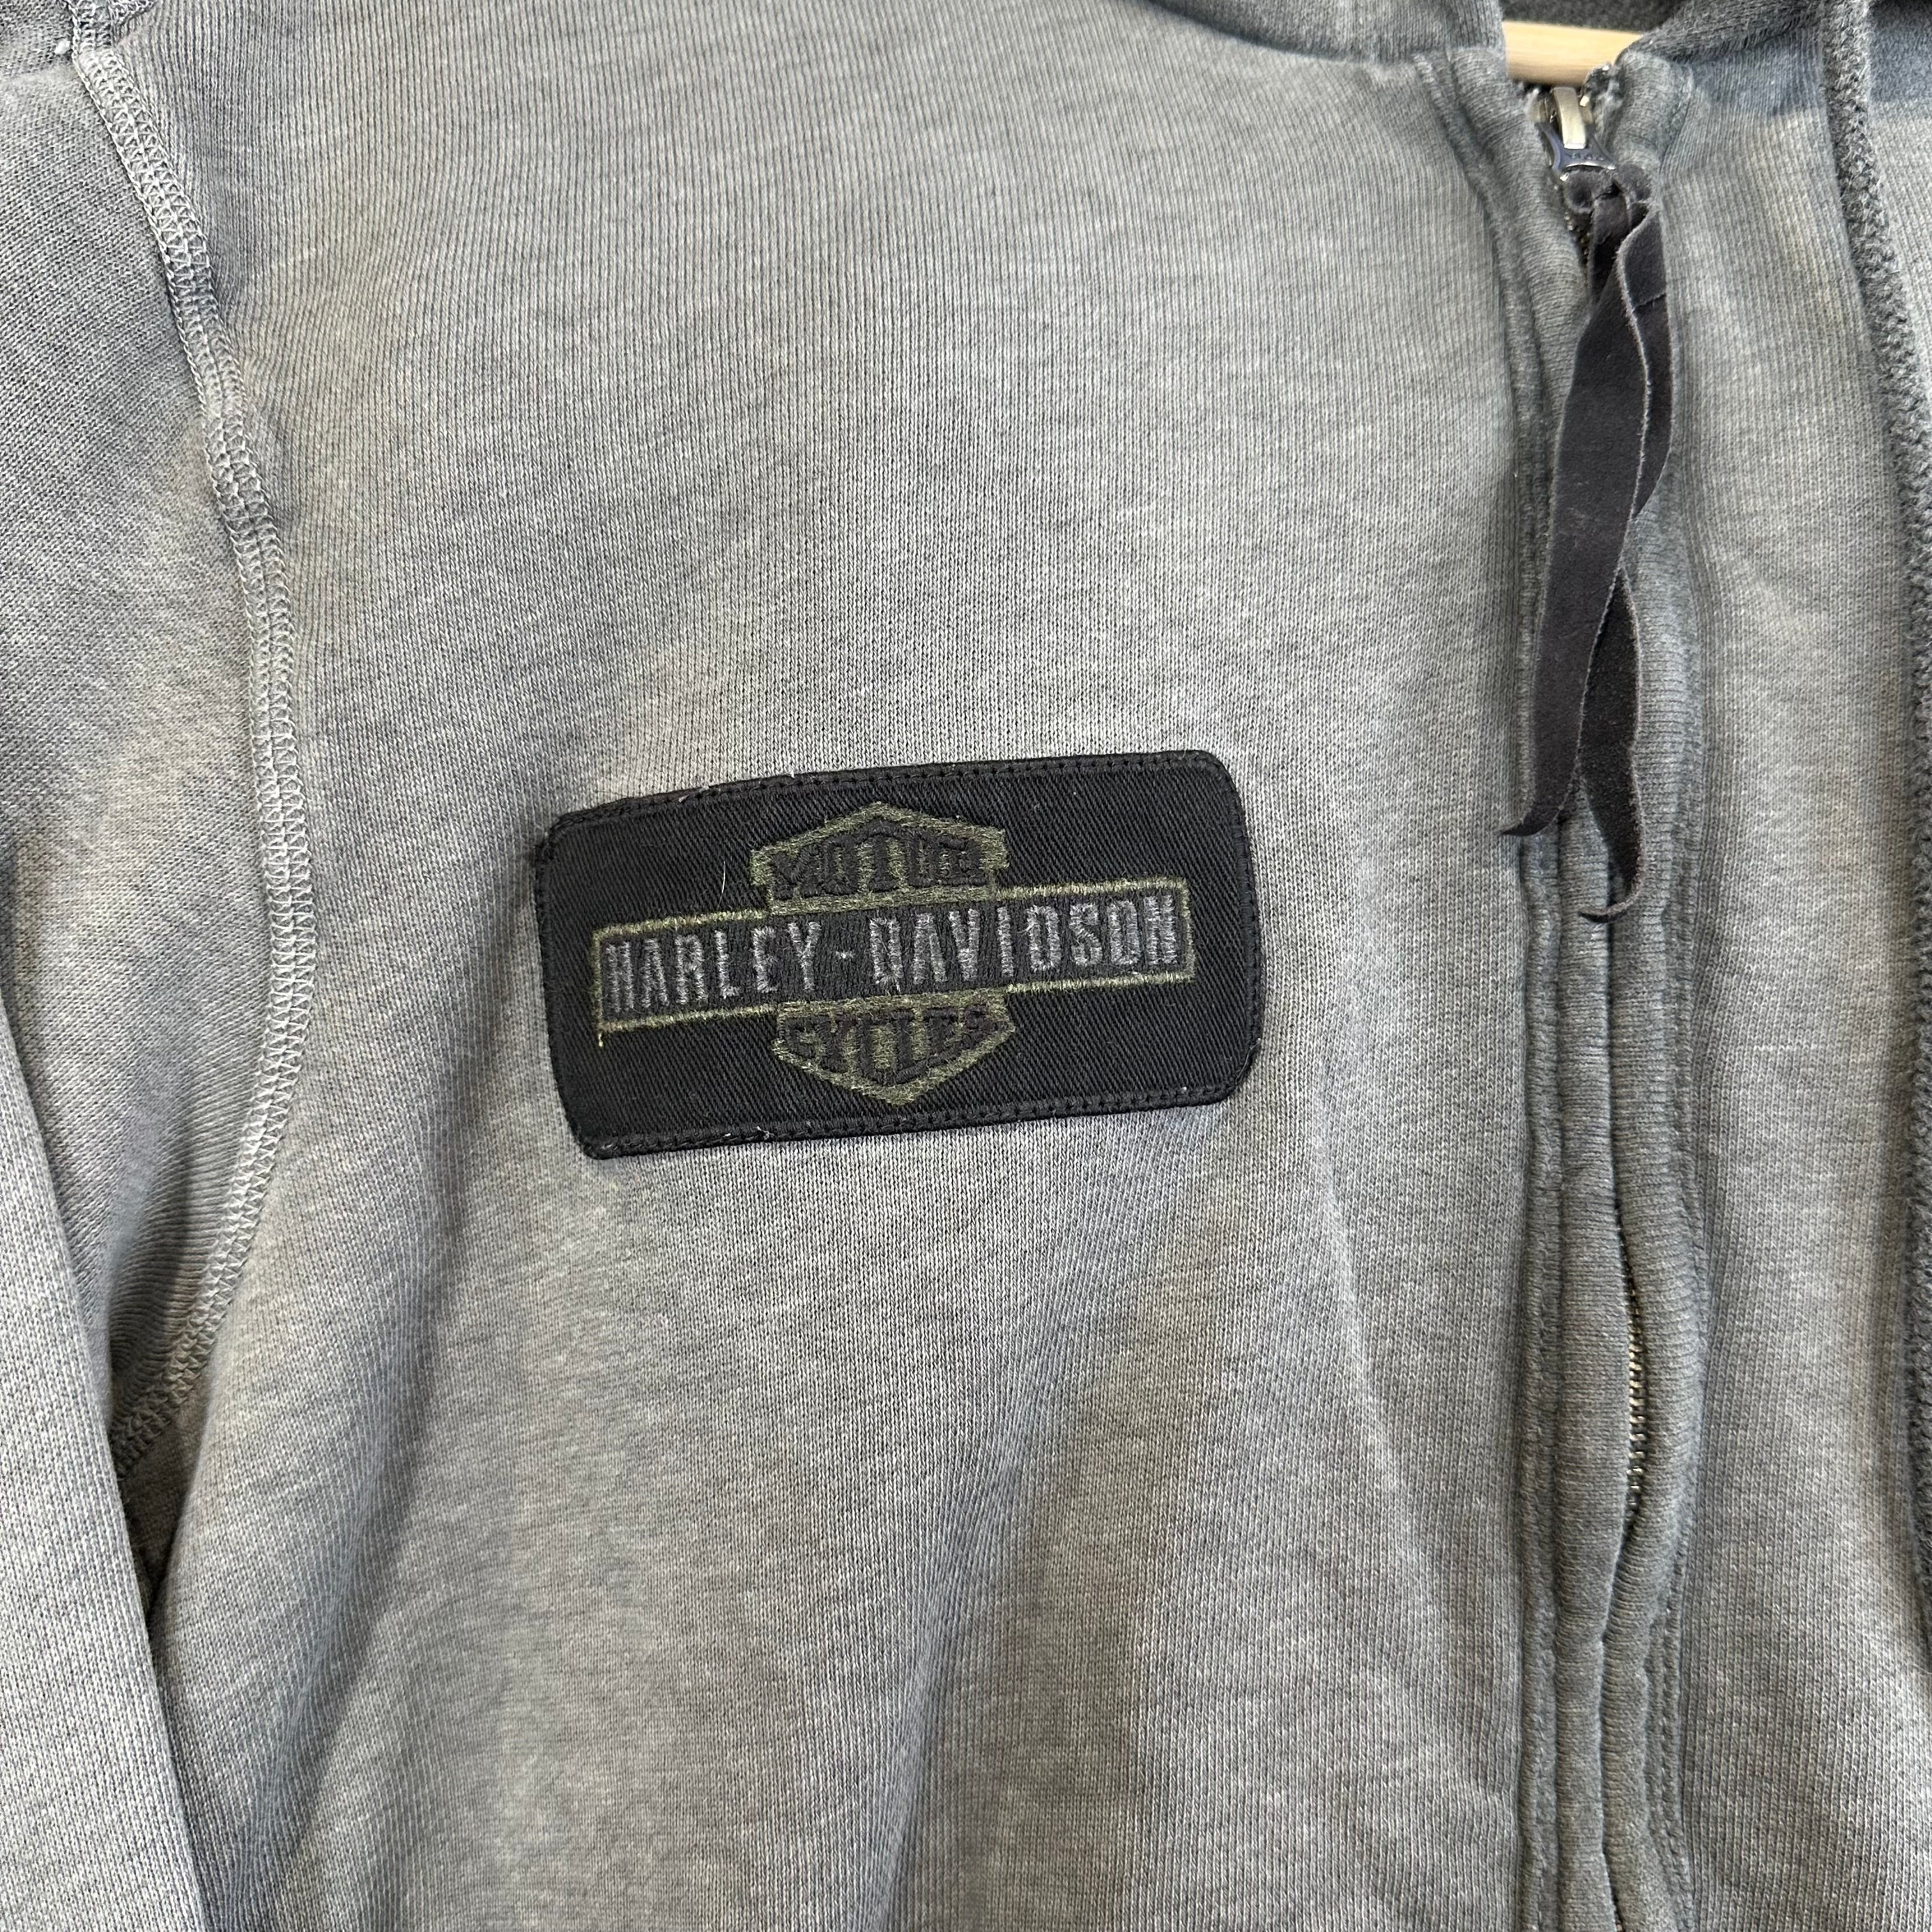 Harley Davidson Zip-Up Faded Hoodie Sweatshirt